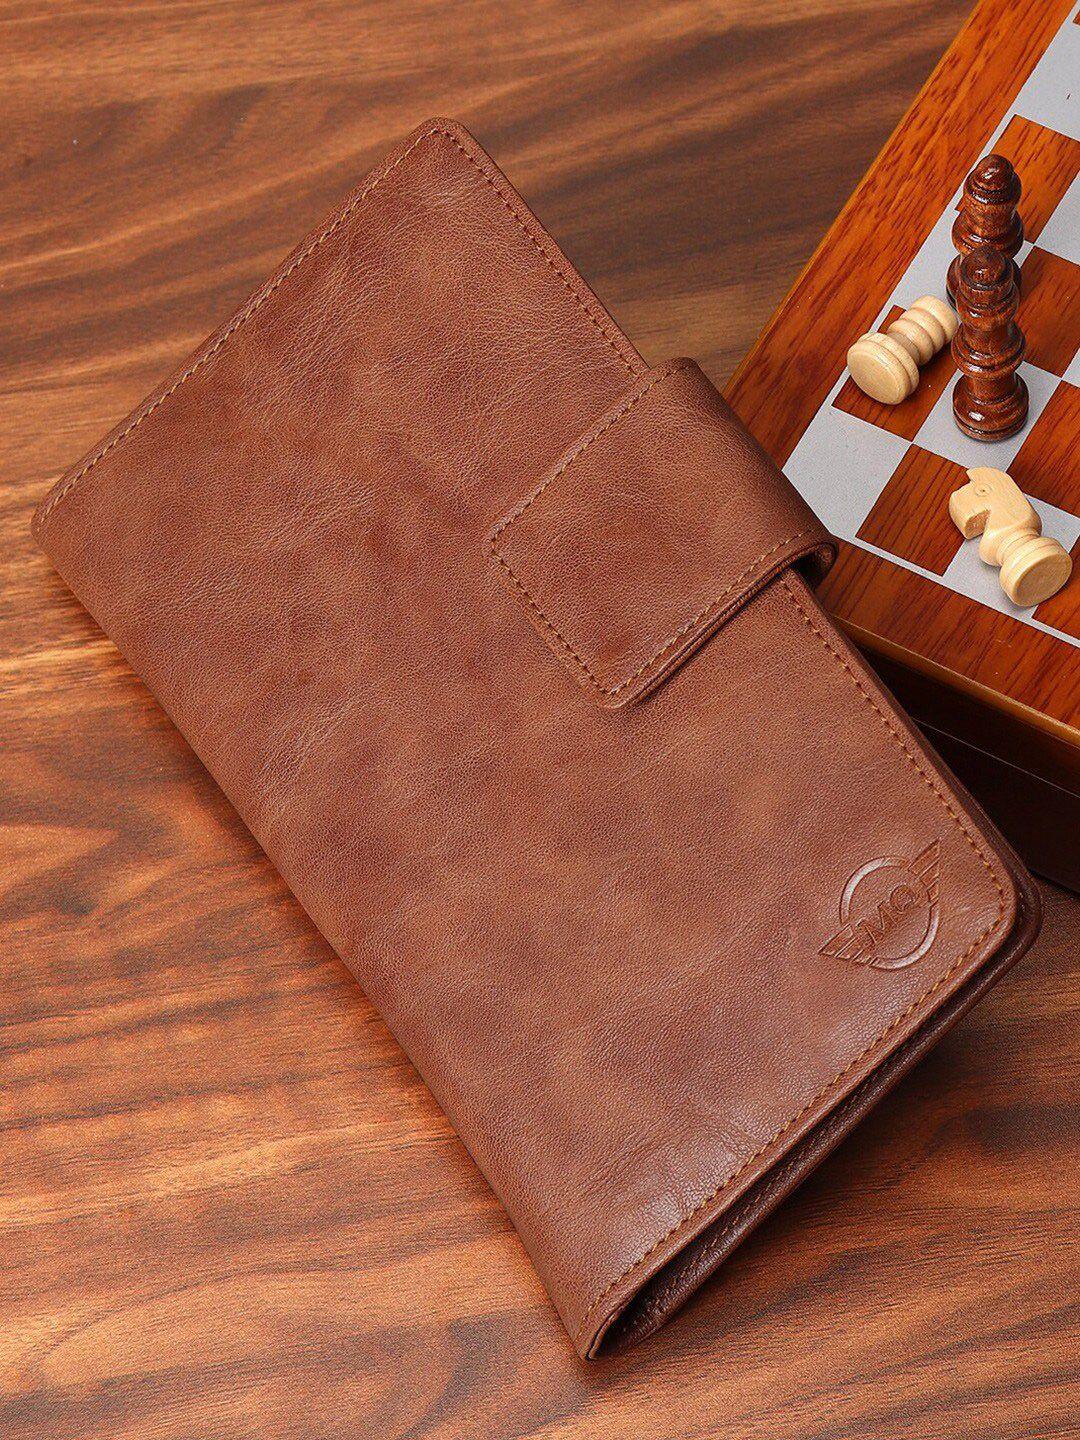 mutaqinoti unisex textured leather passport holder with passport holder